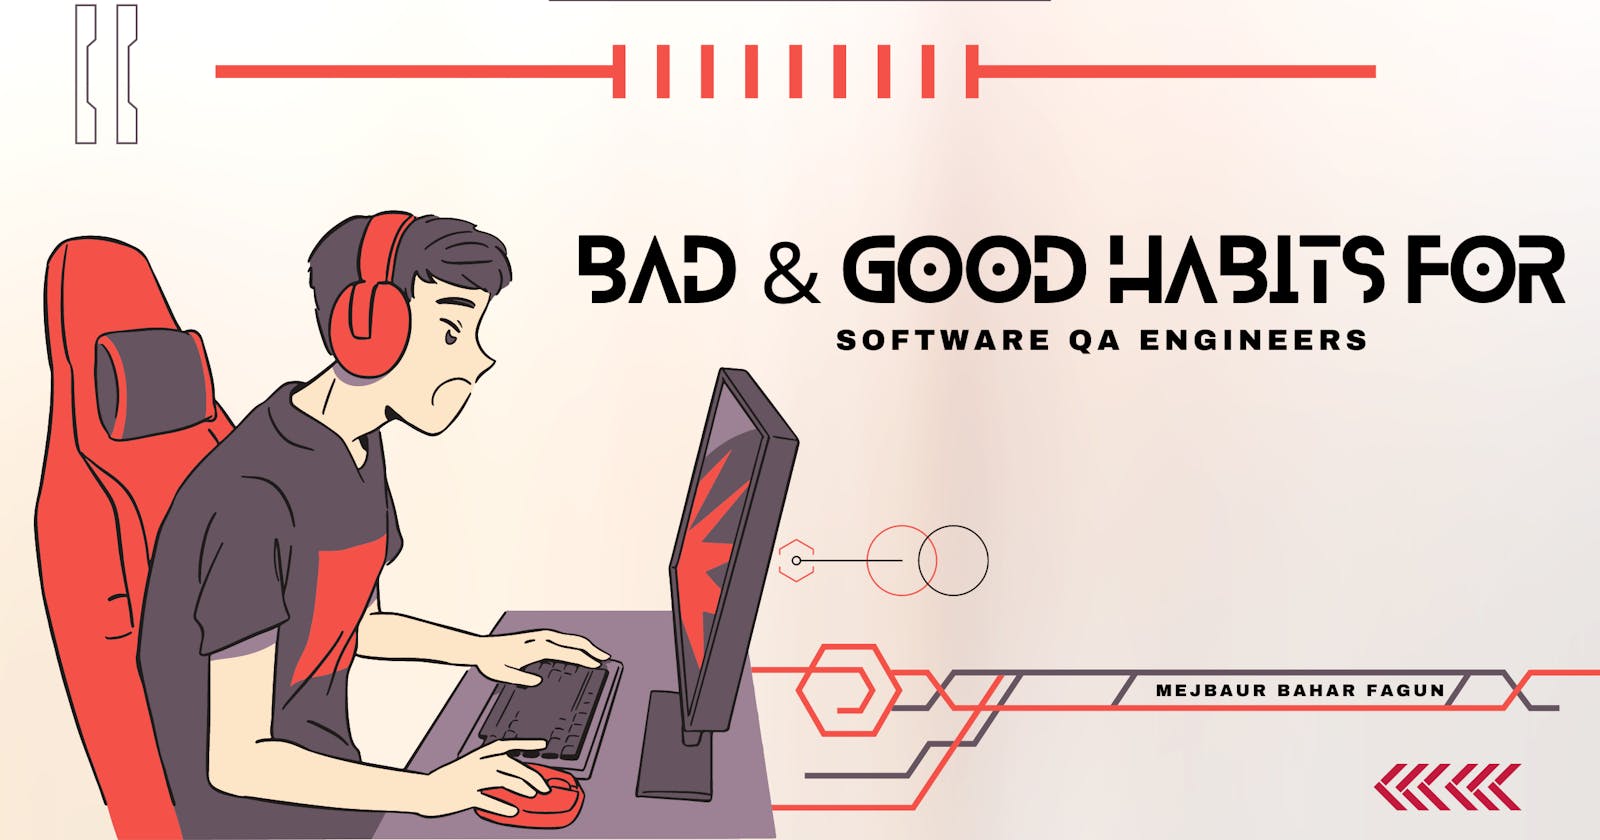 10 Bad & Good Habits for Software QA Engineers